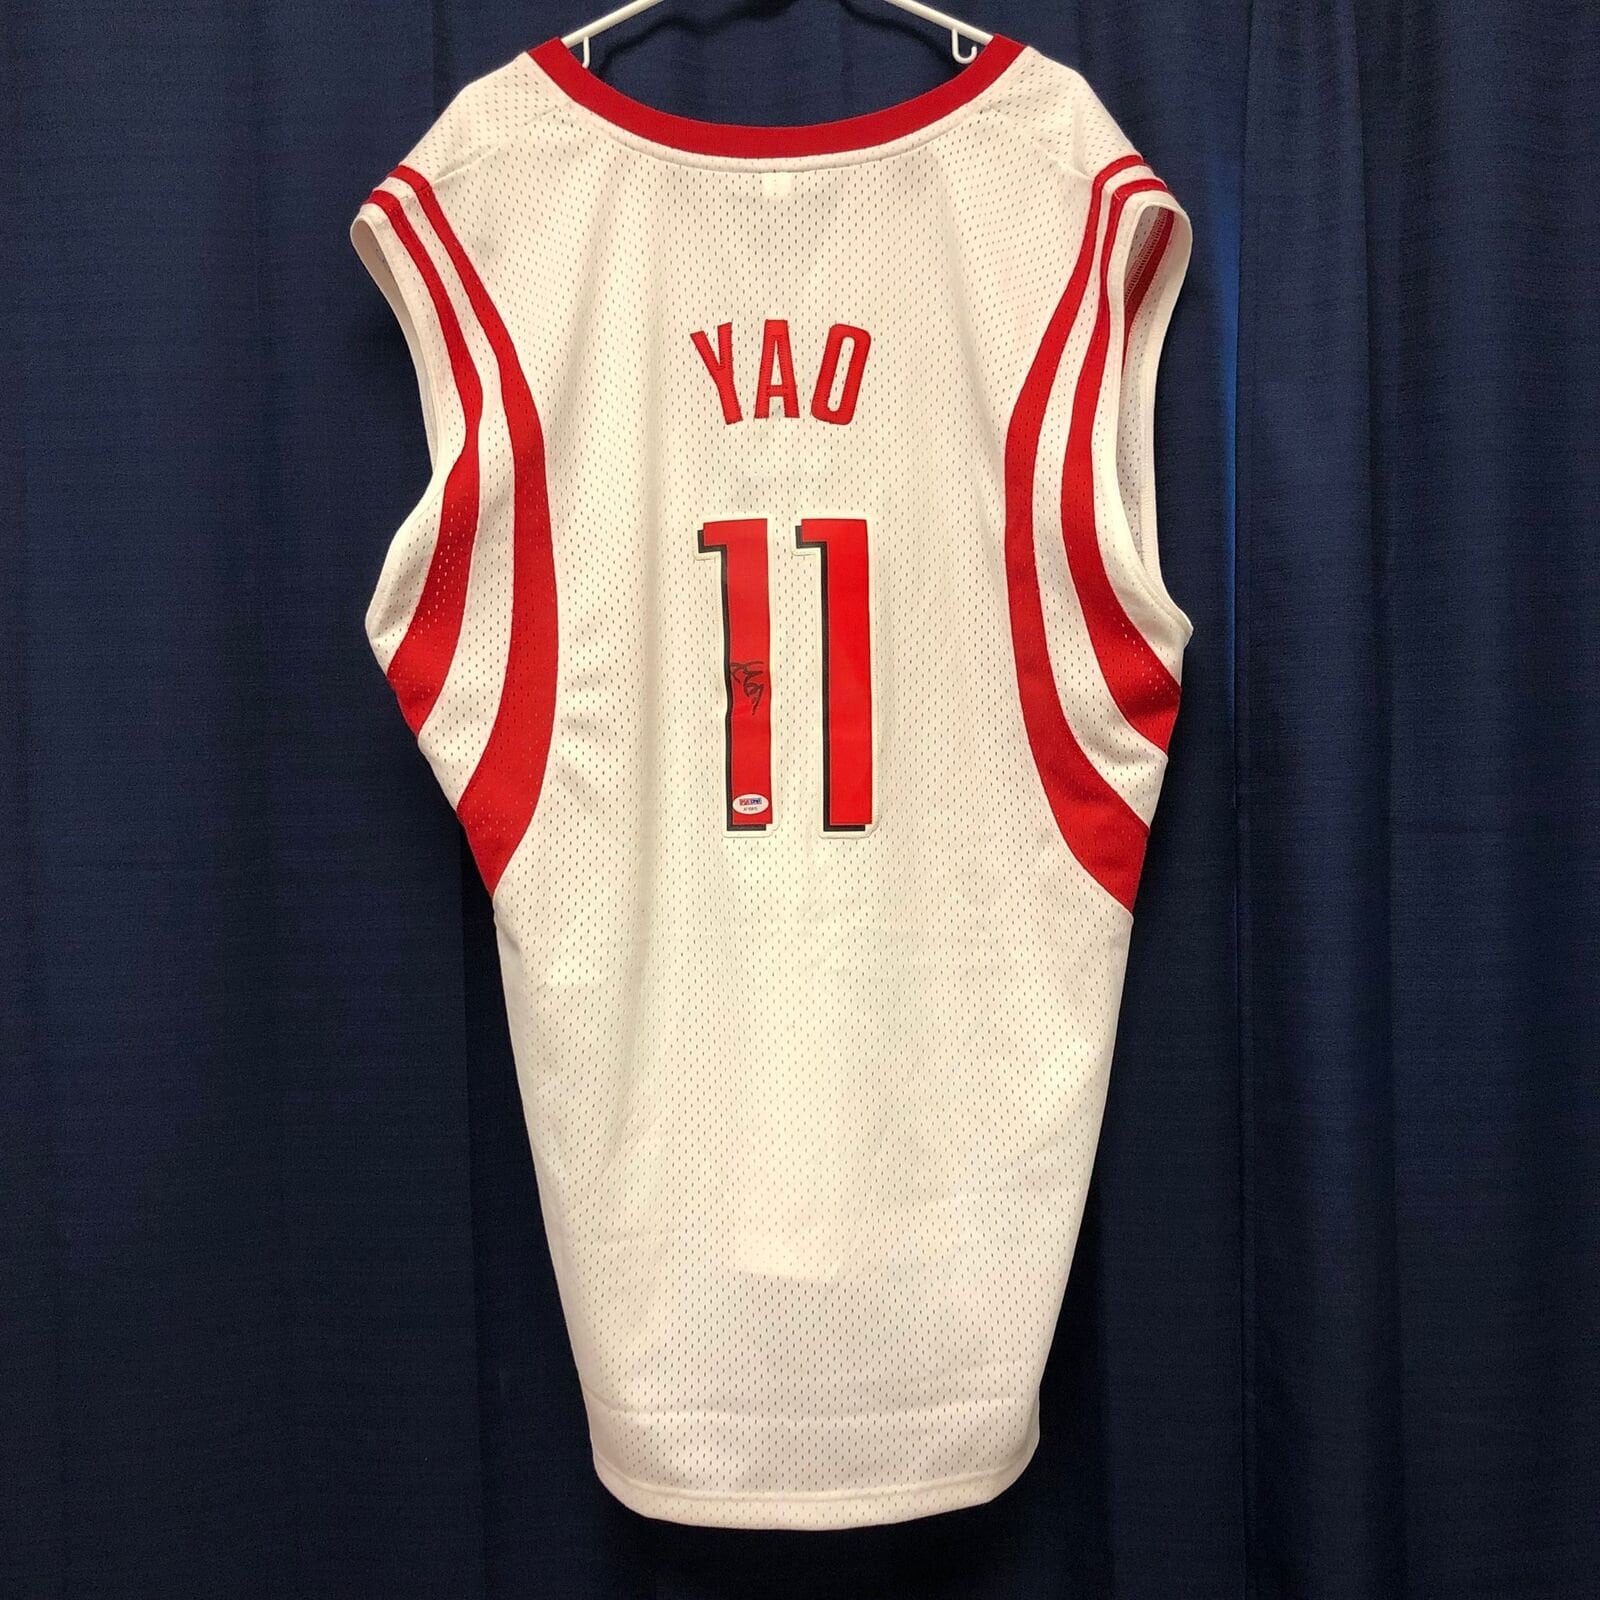 Nike Men's Houston Rockets Jabari Smith Jr. #1 Red Dri-Fit Swingman Jersey, XL